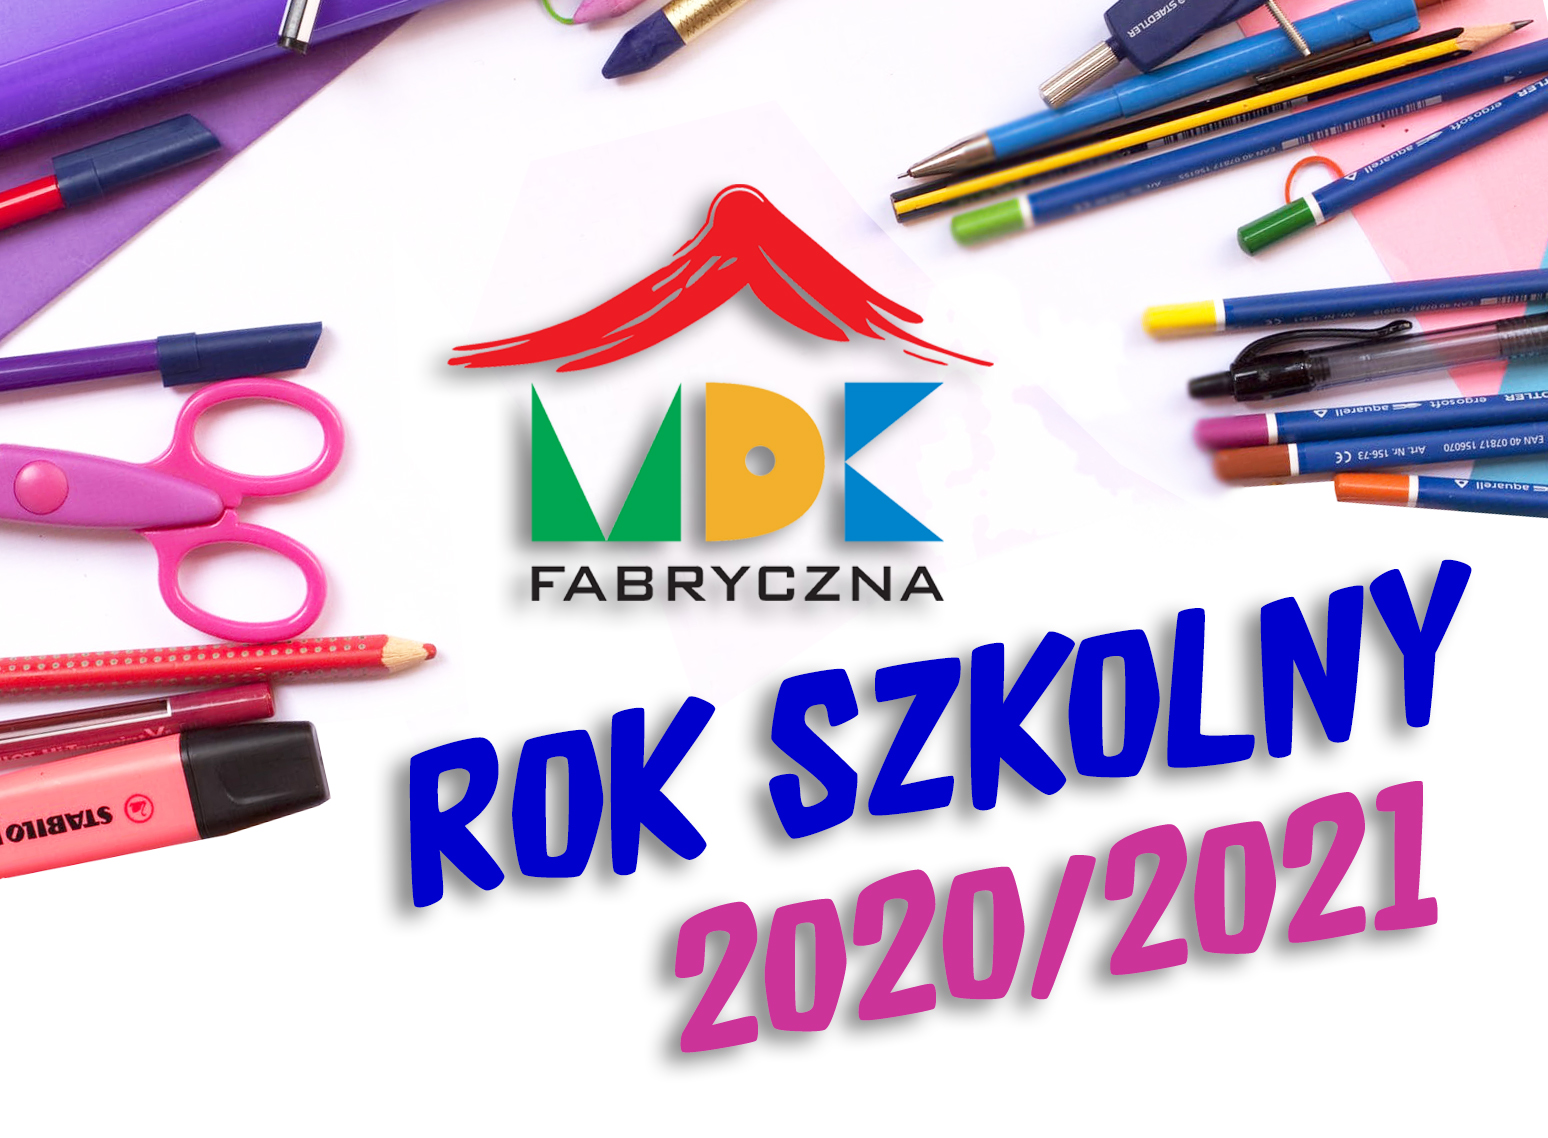 ROK SZKOLNY 2020 2021